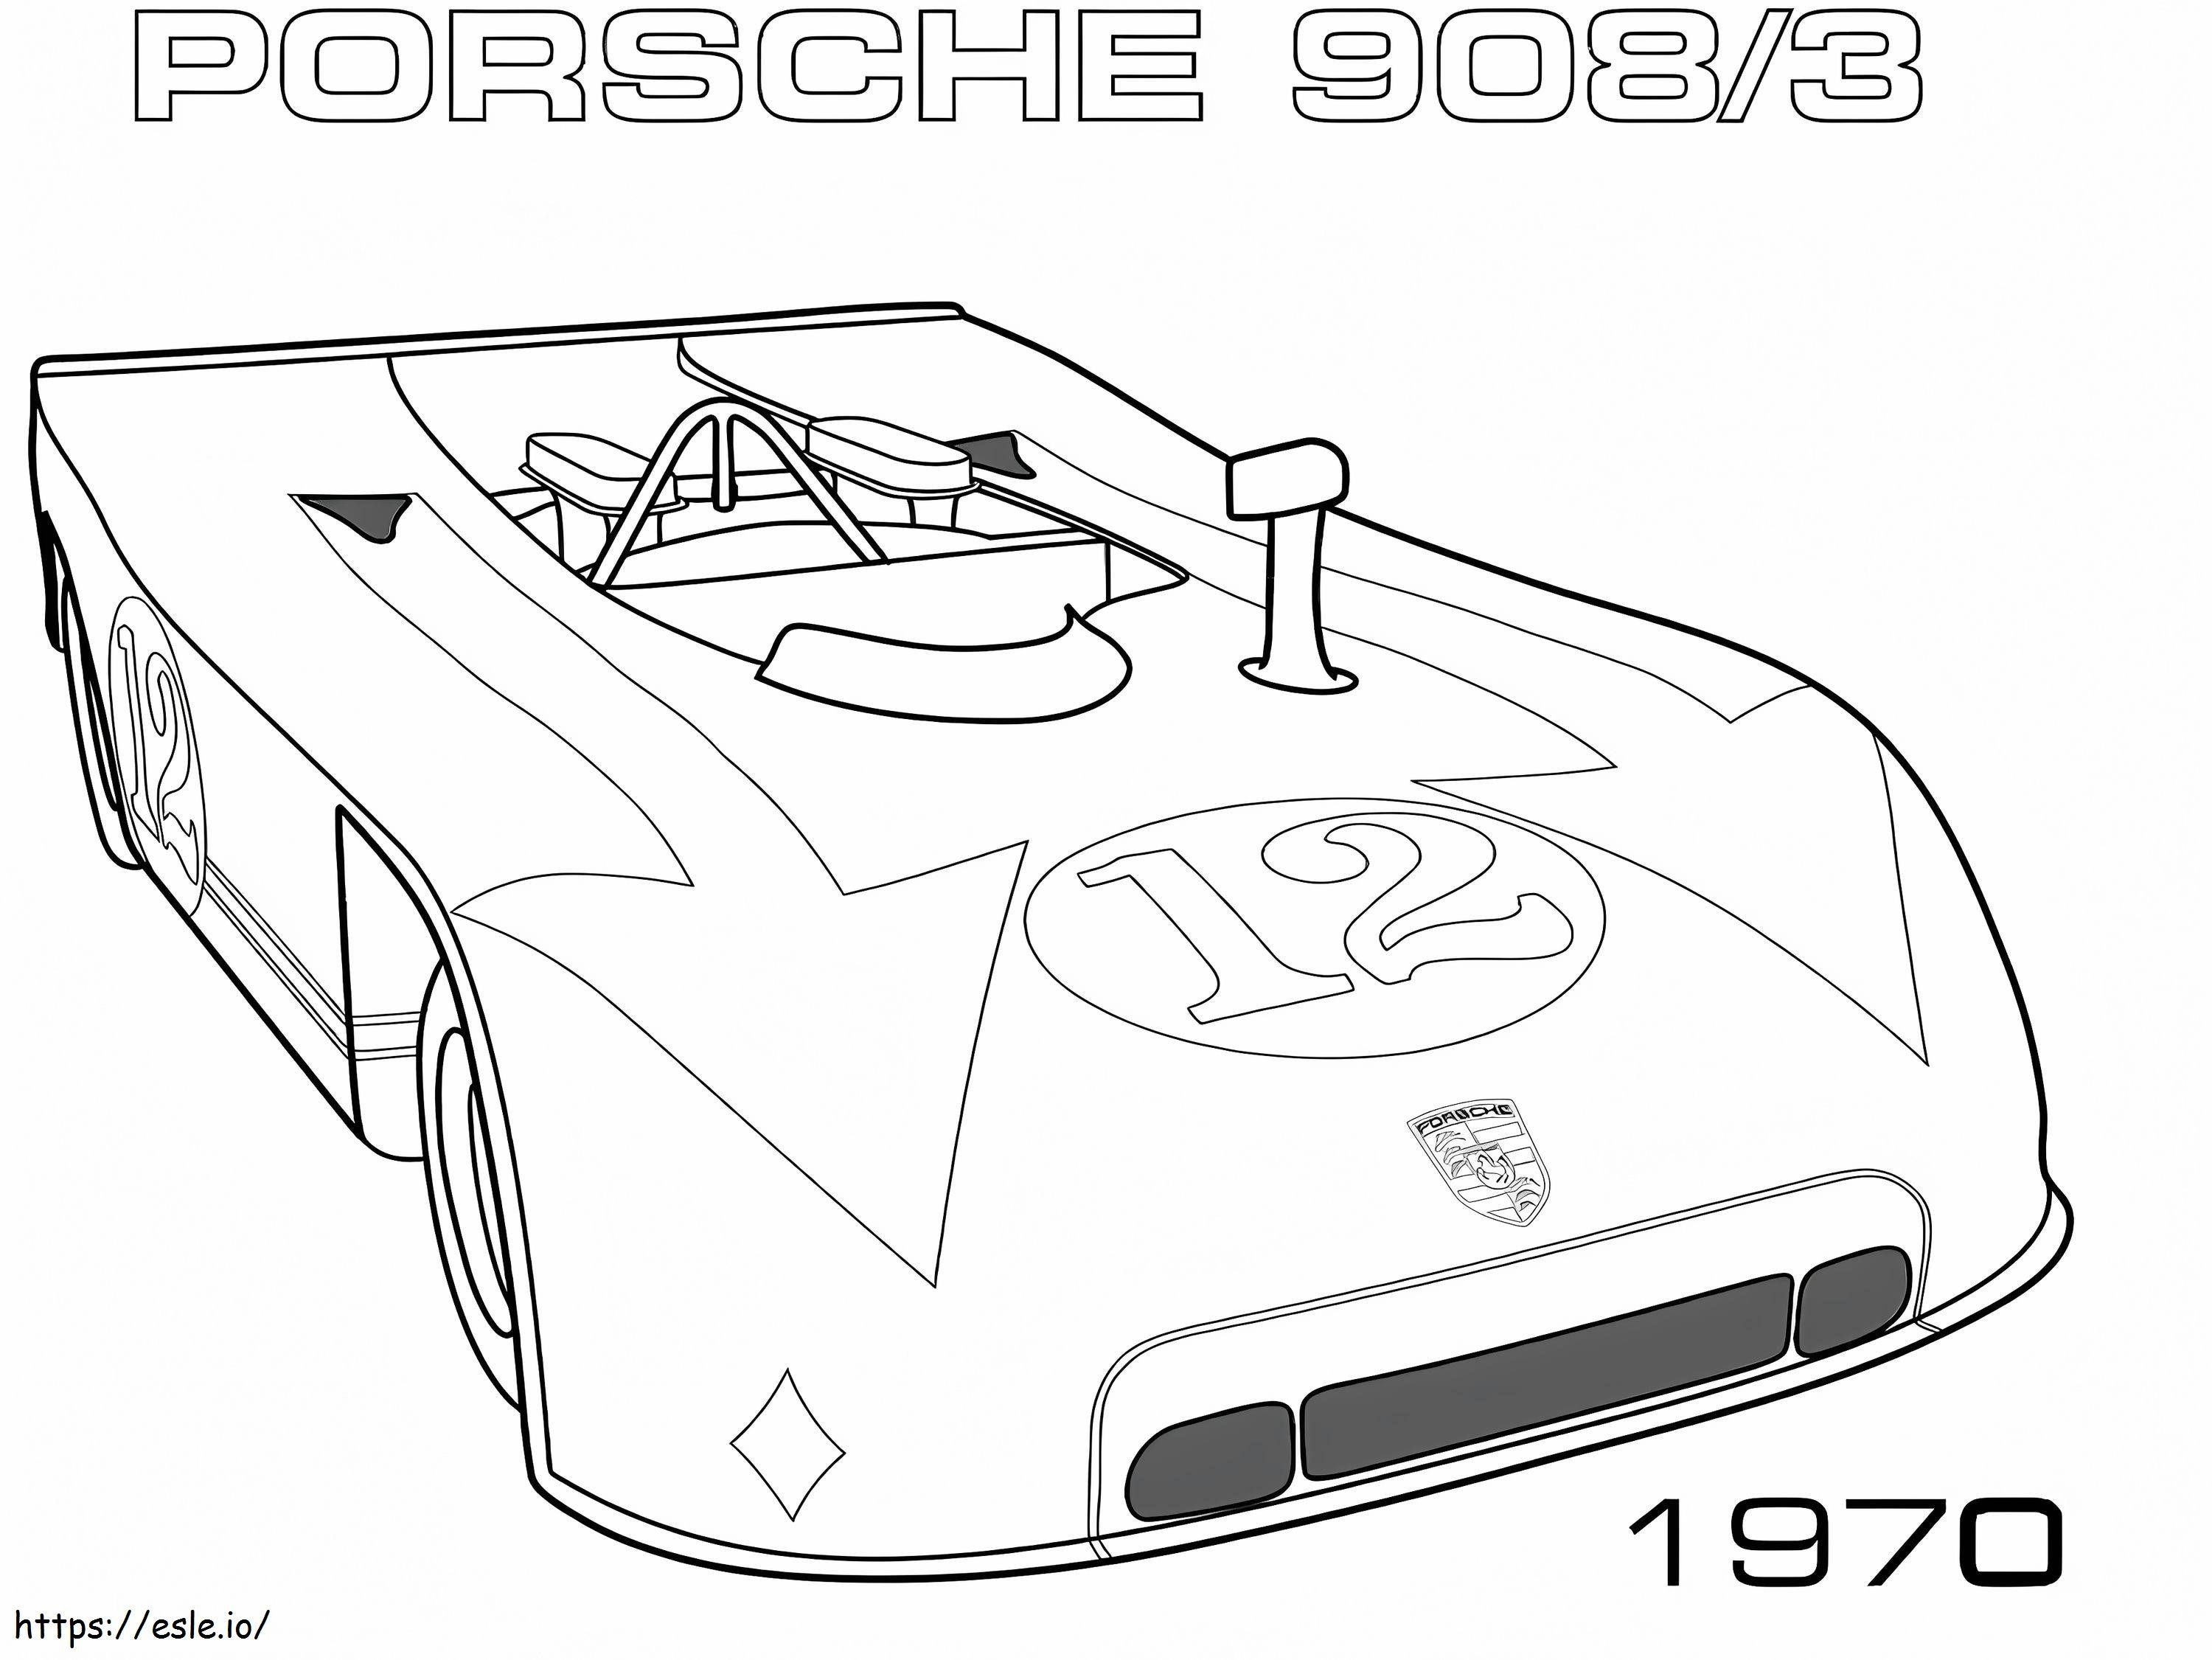 1585989209 1970 Porsche 9083 kifestő